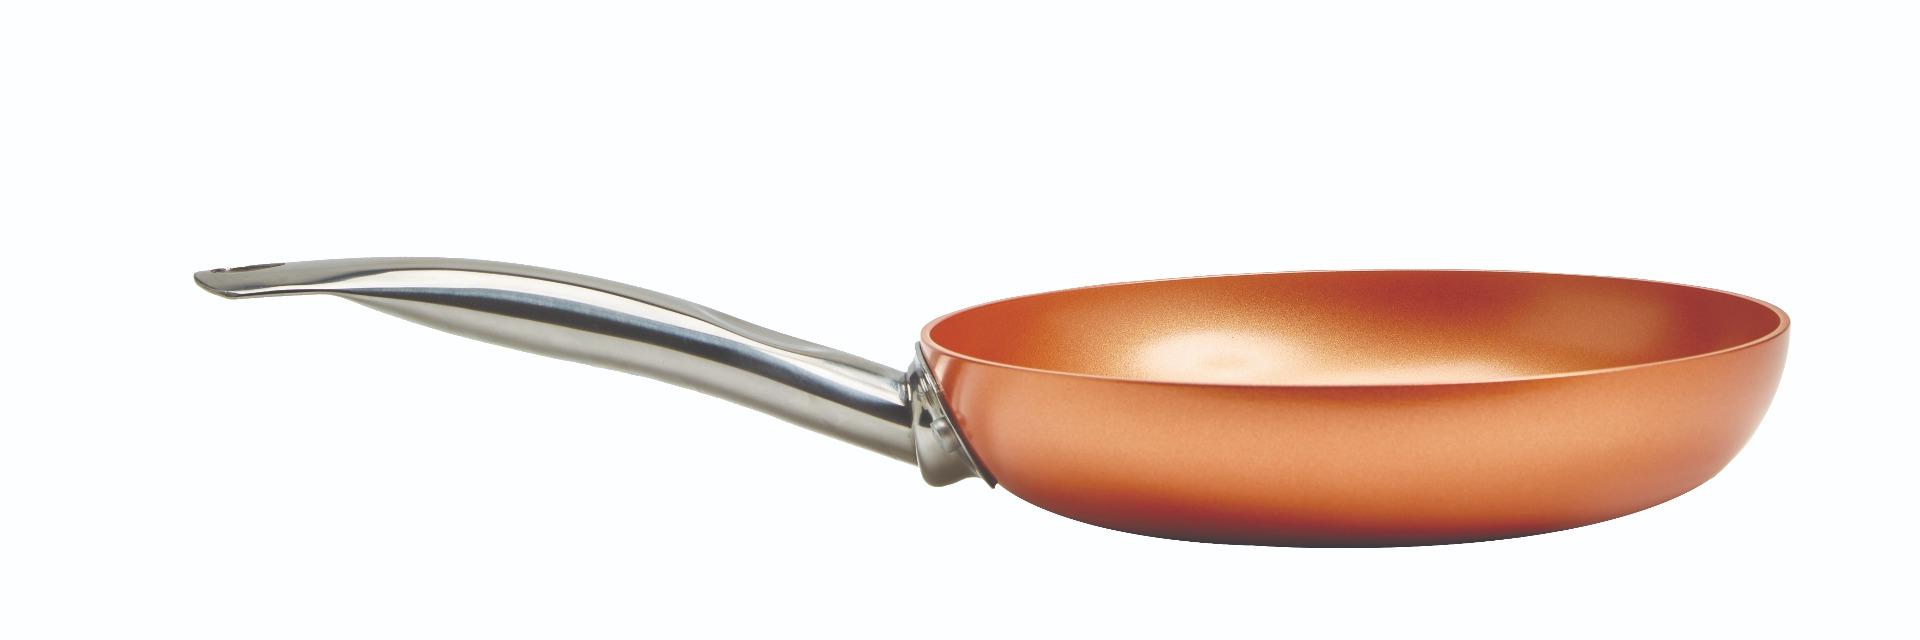 copperchef Copper Chef Round Fry Pan, 25 cm, 540-900105